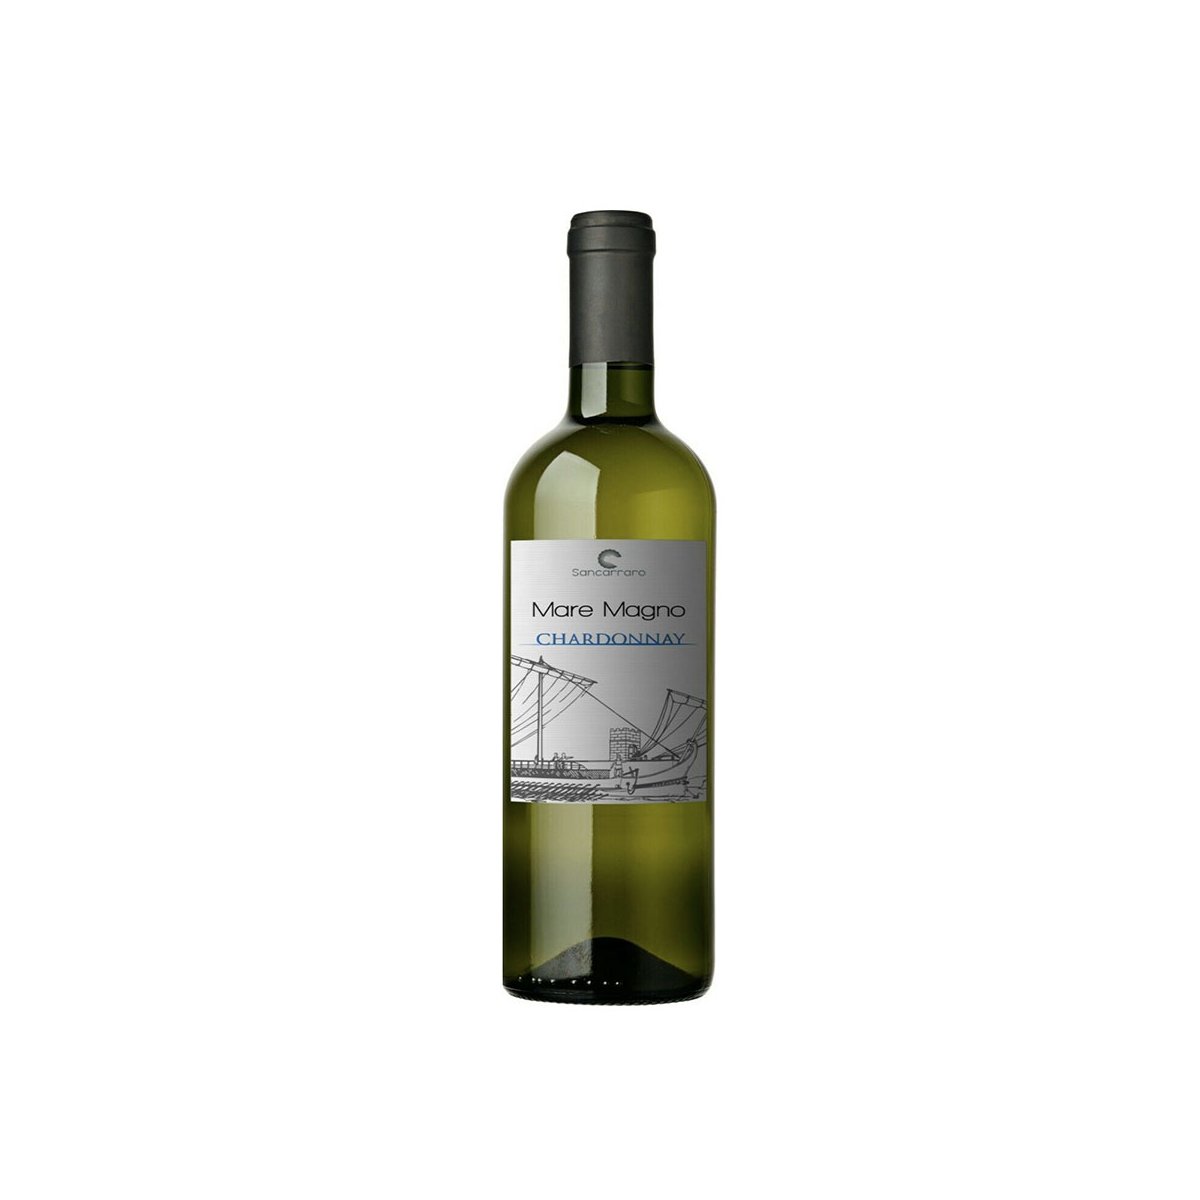 Mare Magno Chardonnay 2017  Sancarraro - Sicilia